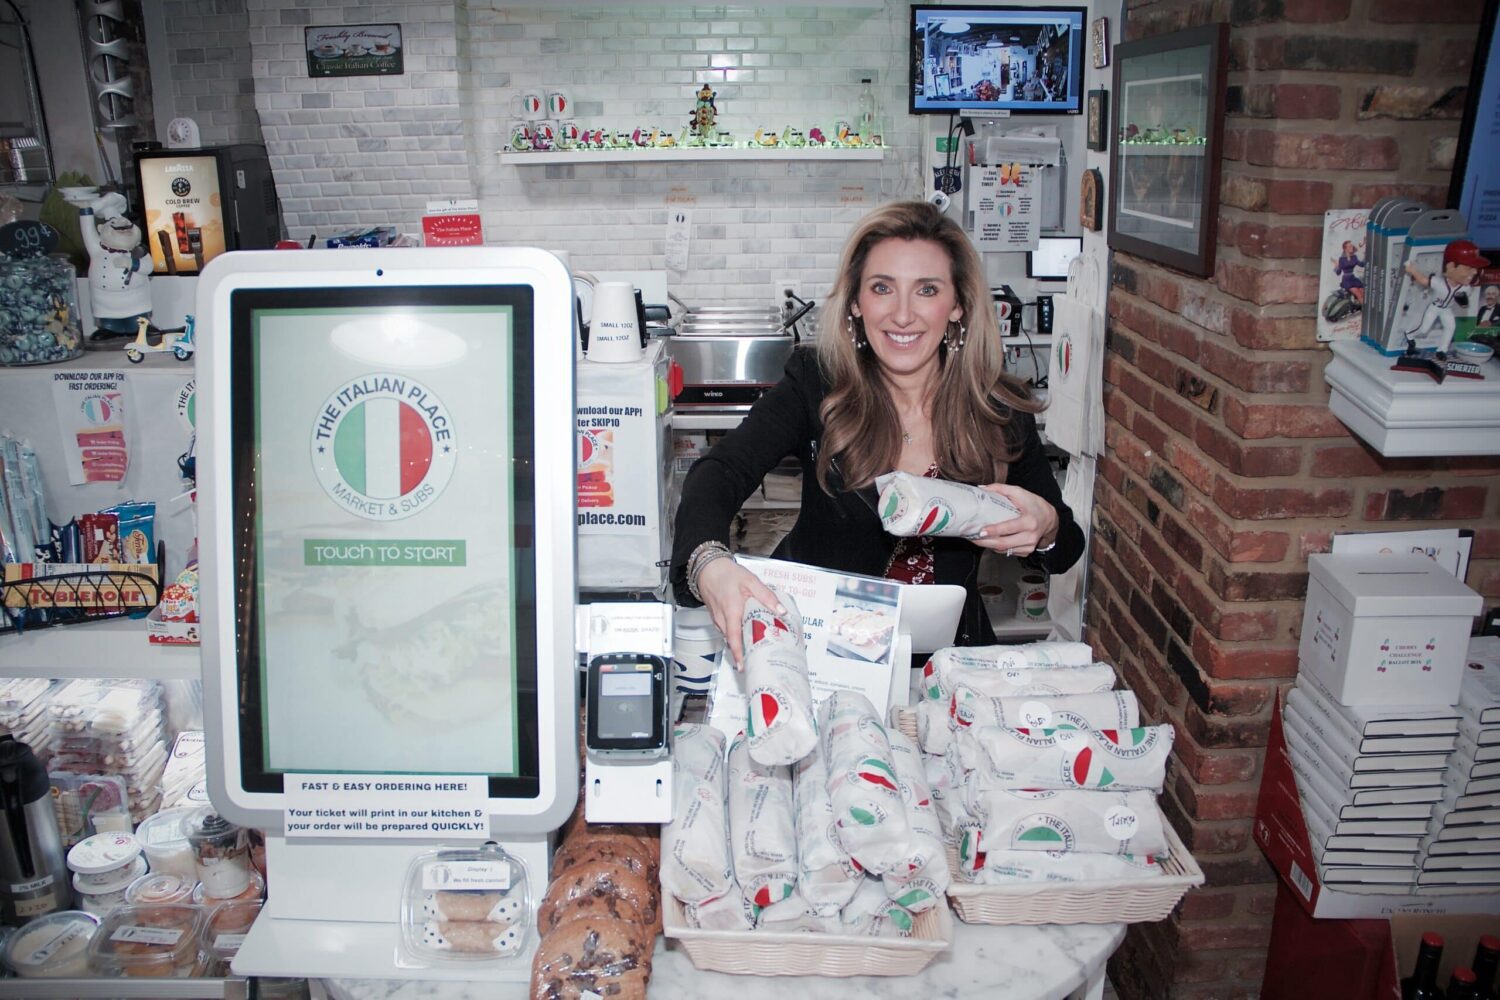 The Italian Place Raises Revenue with Kiosk Technology